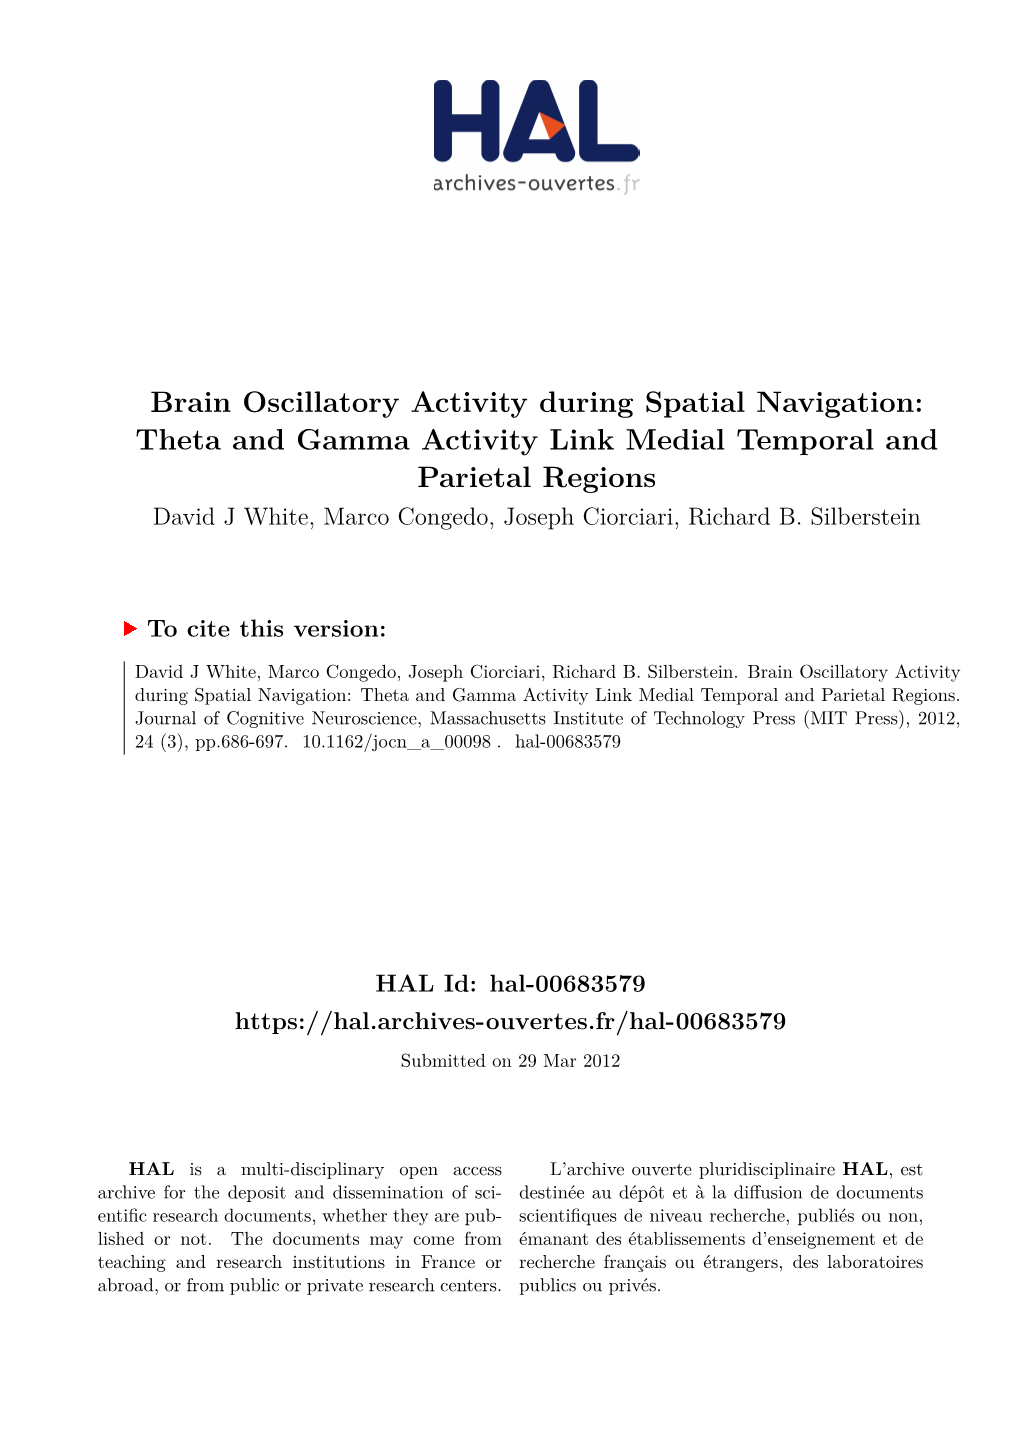 Brain Oscillatory Activity During Spatial Navigation